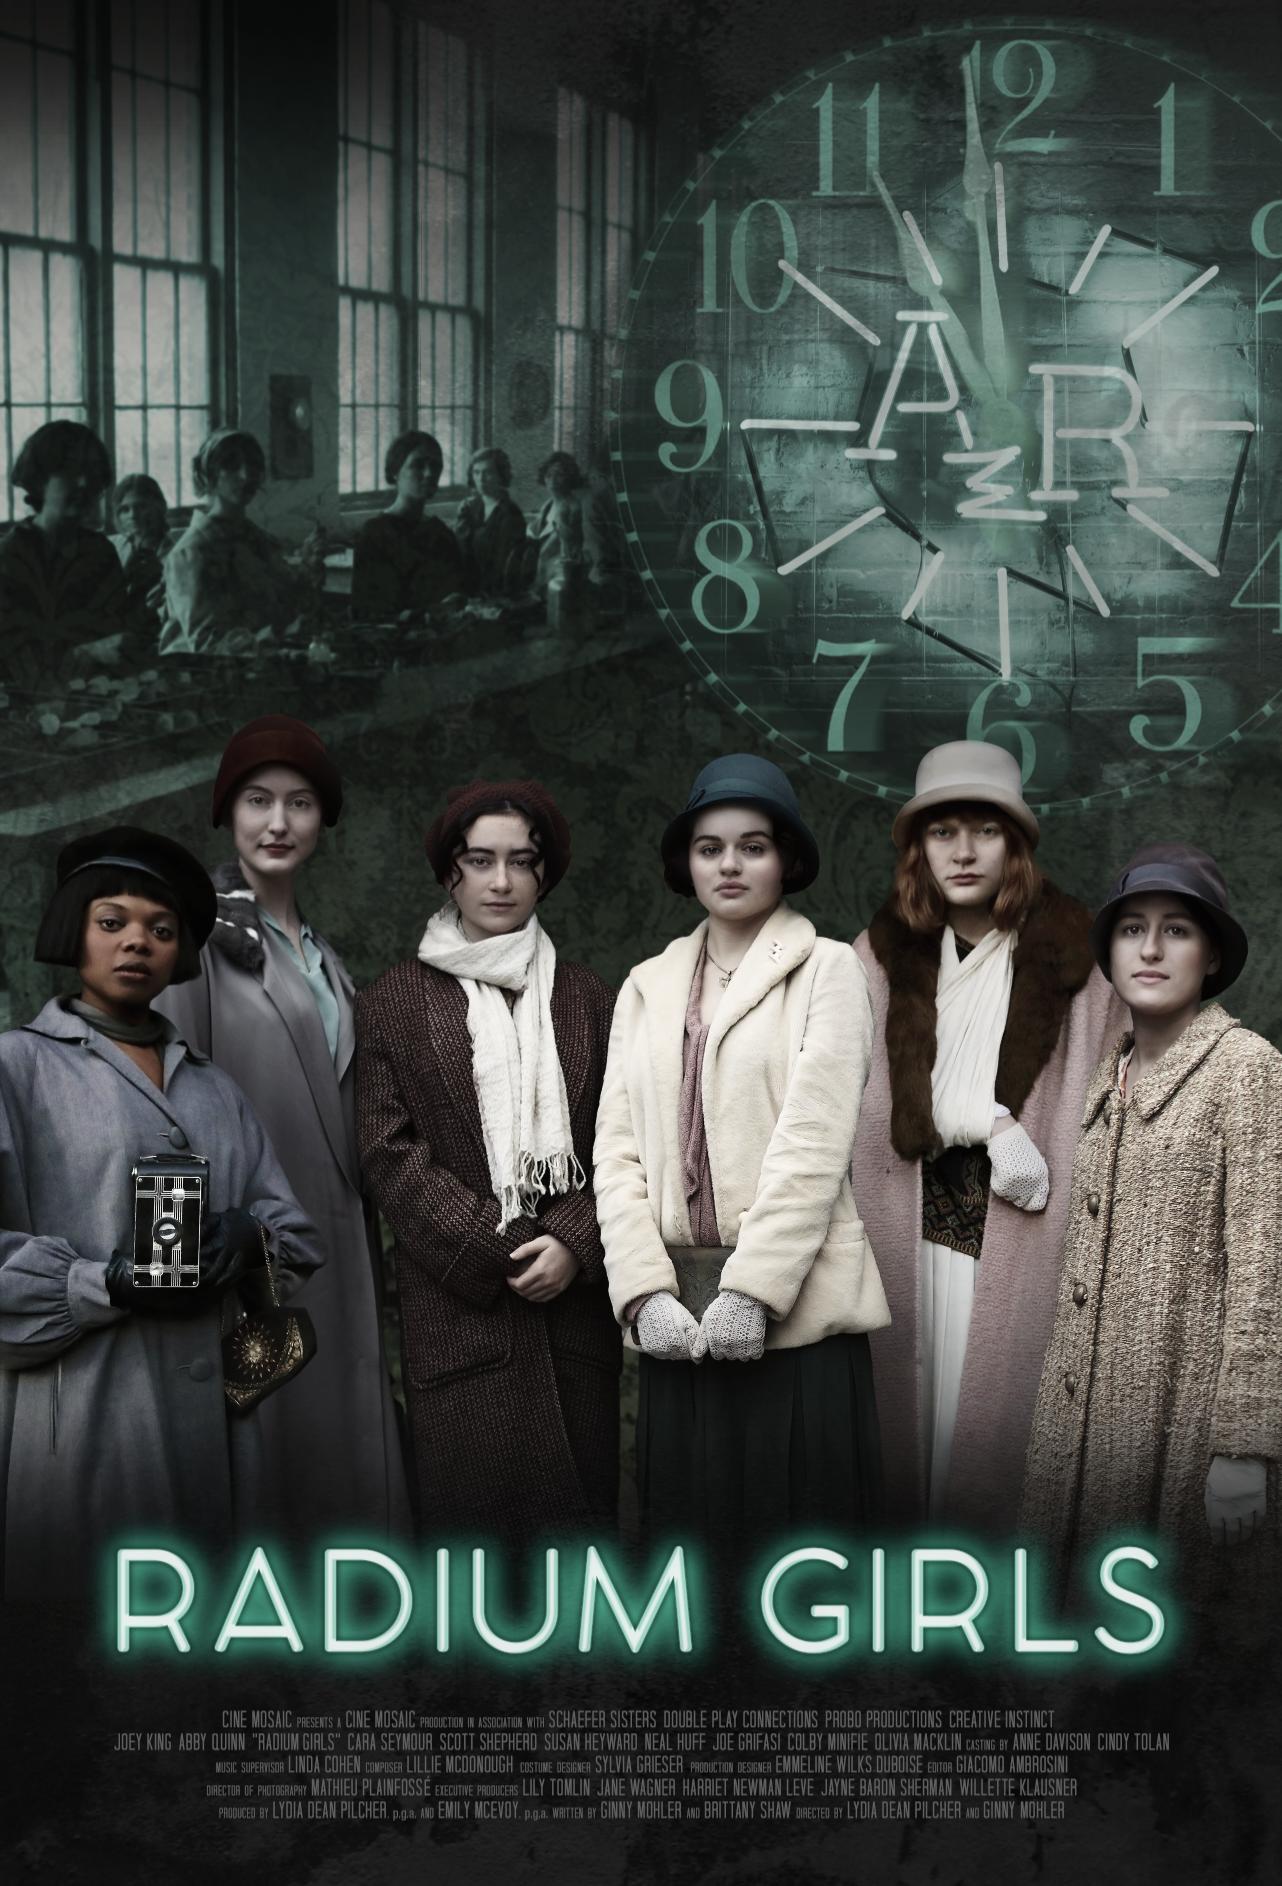 Nonton film Radium Girls layarkaca21 indoxx1 ganool online streaming terbaru